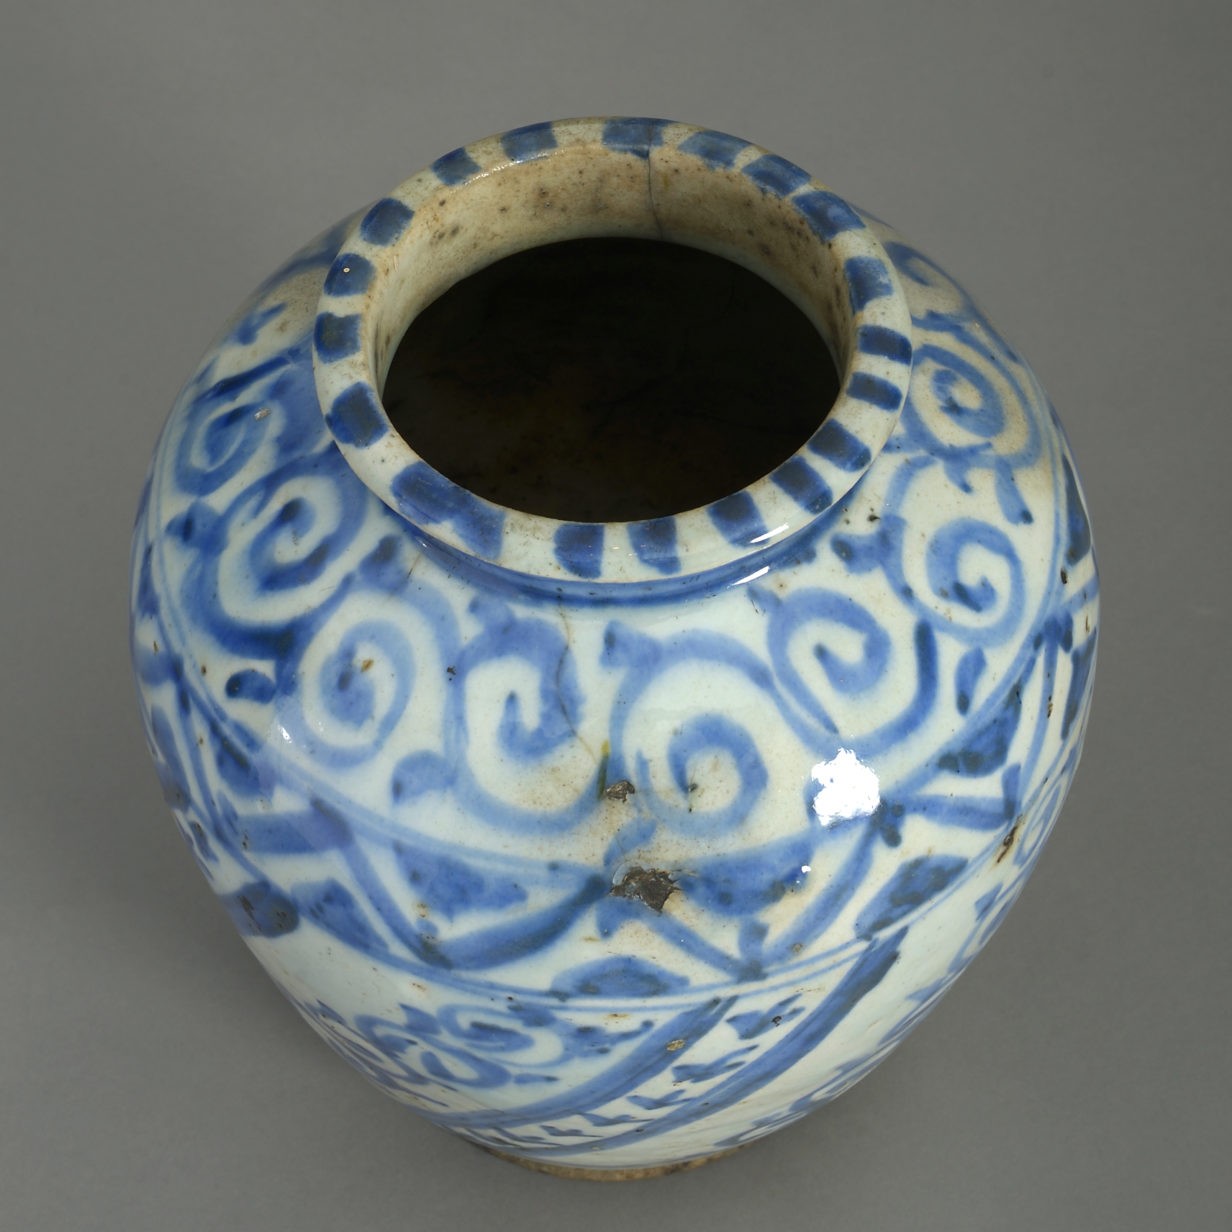 19th century blue and white glazed persian vase